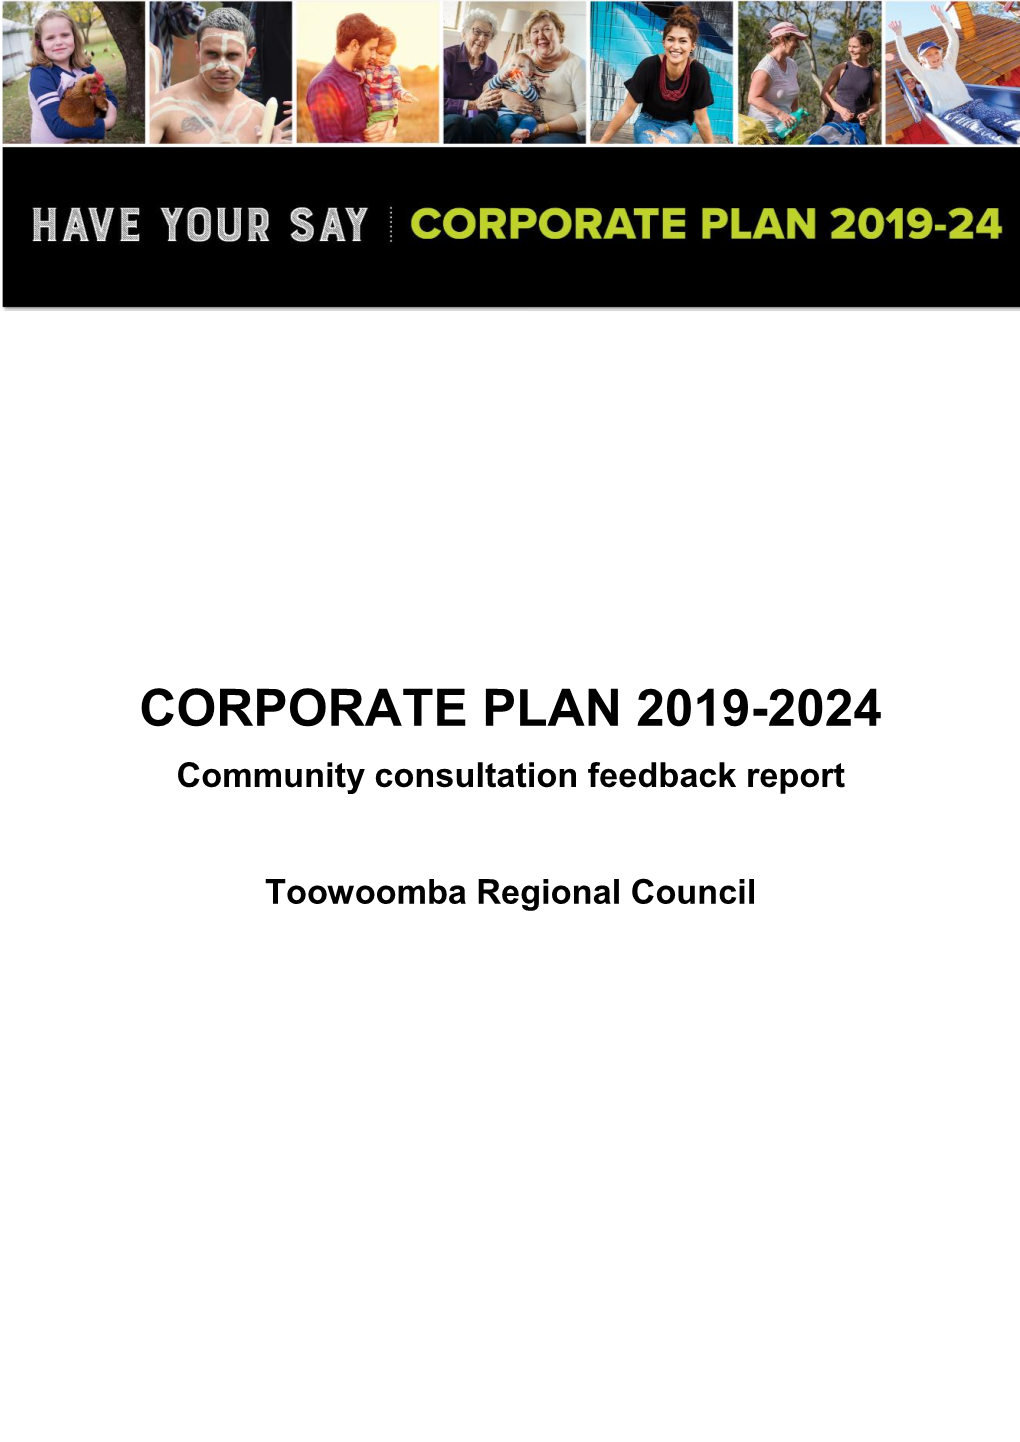 CORPORATE PLAN 2019-2024 Community Consultation Feedback Report